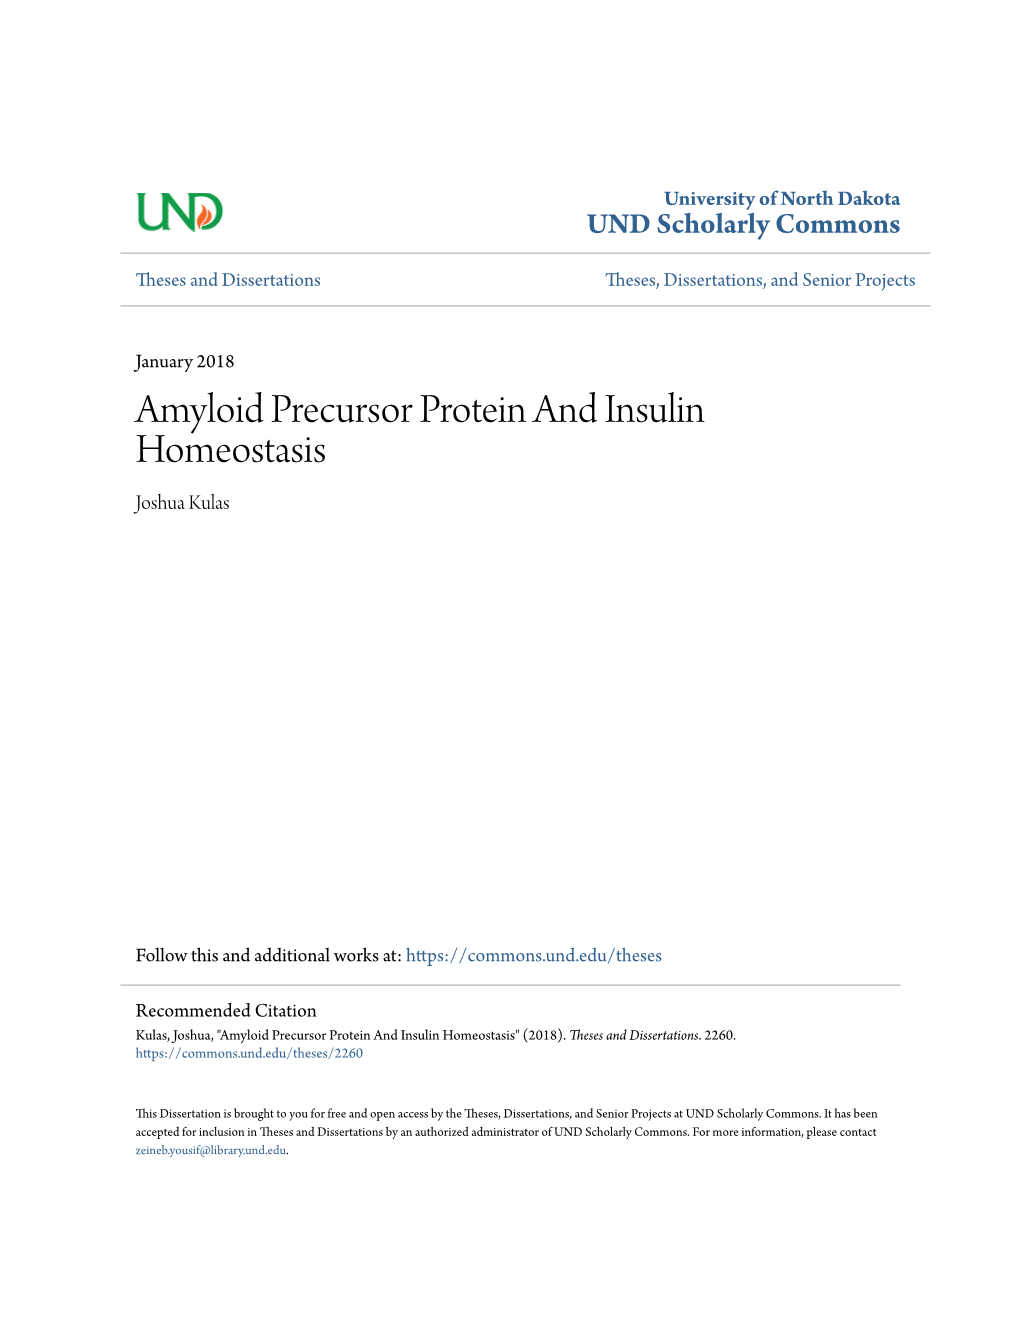 Amyloid Precursor Protein and Insulin Homeostasis Joshua Kulas